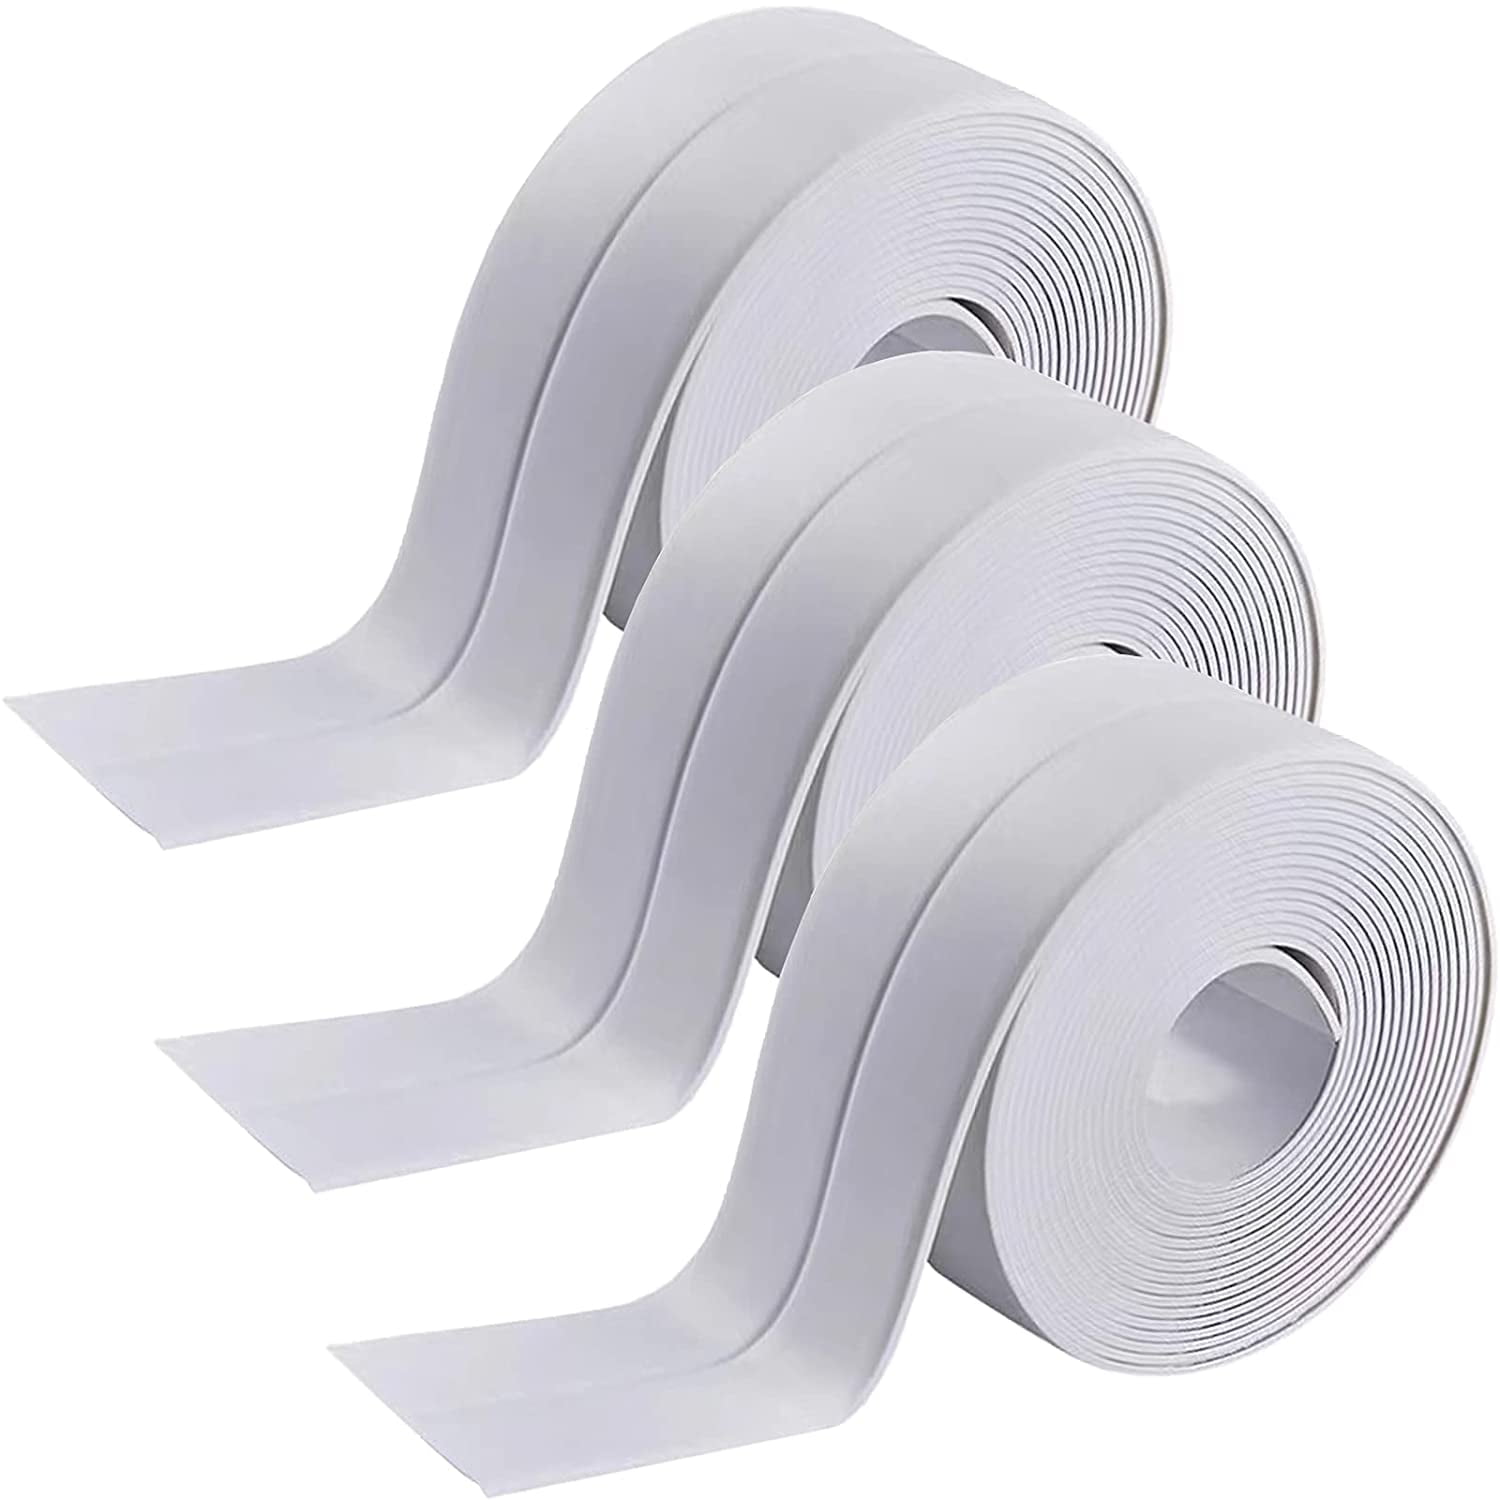 tazanma 2 Pack Caulk Strip Sealing Strip PE Self Adhesive Waterproof Tape  for Bathtub Bathroom Shower